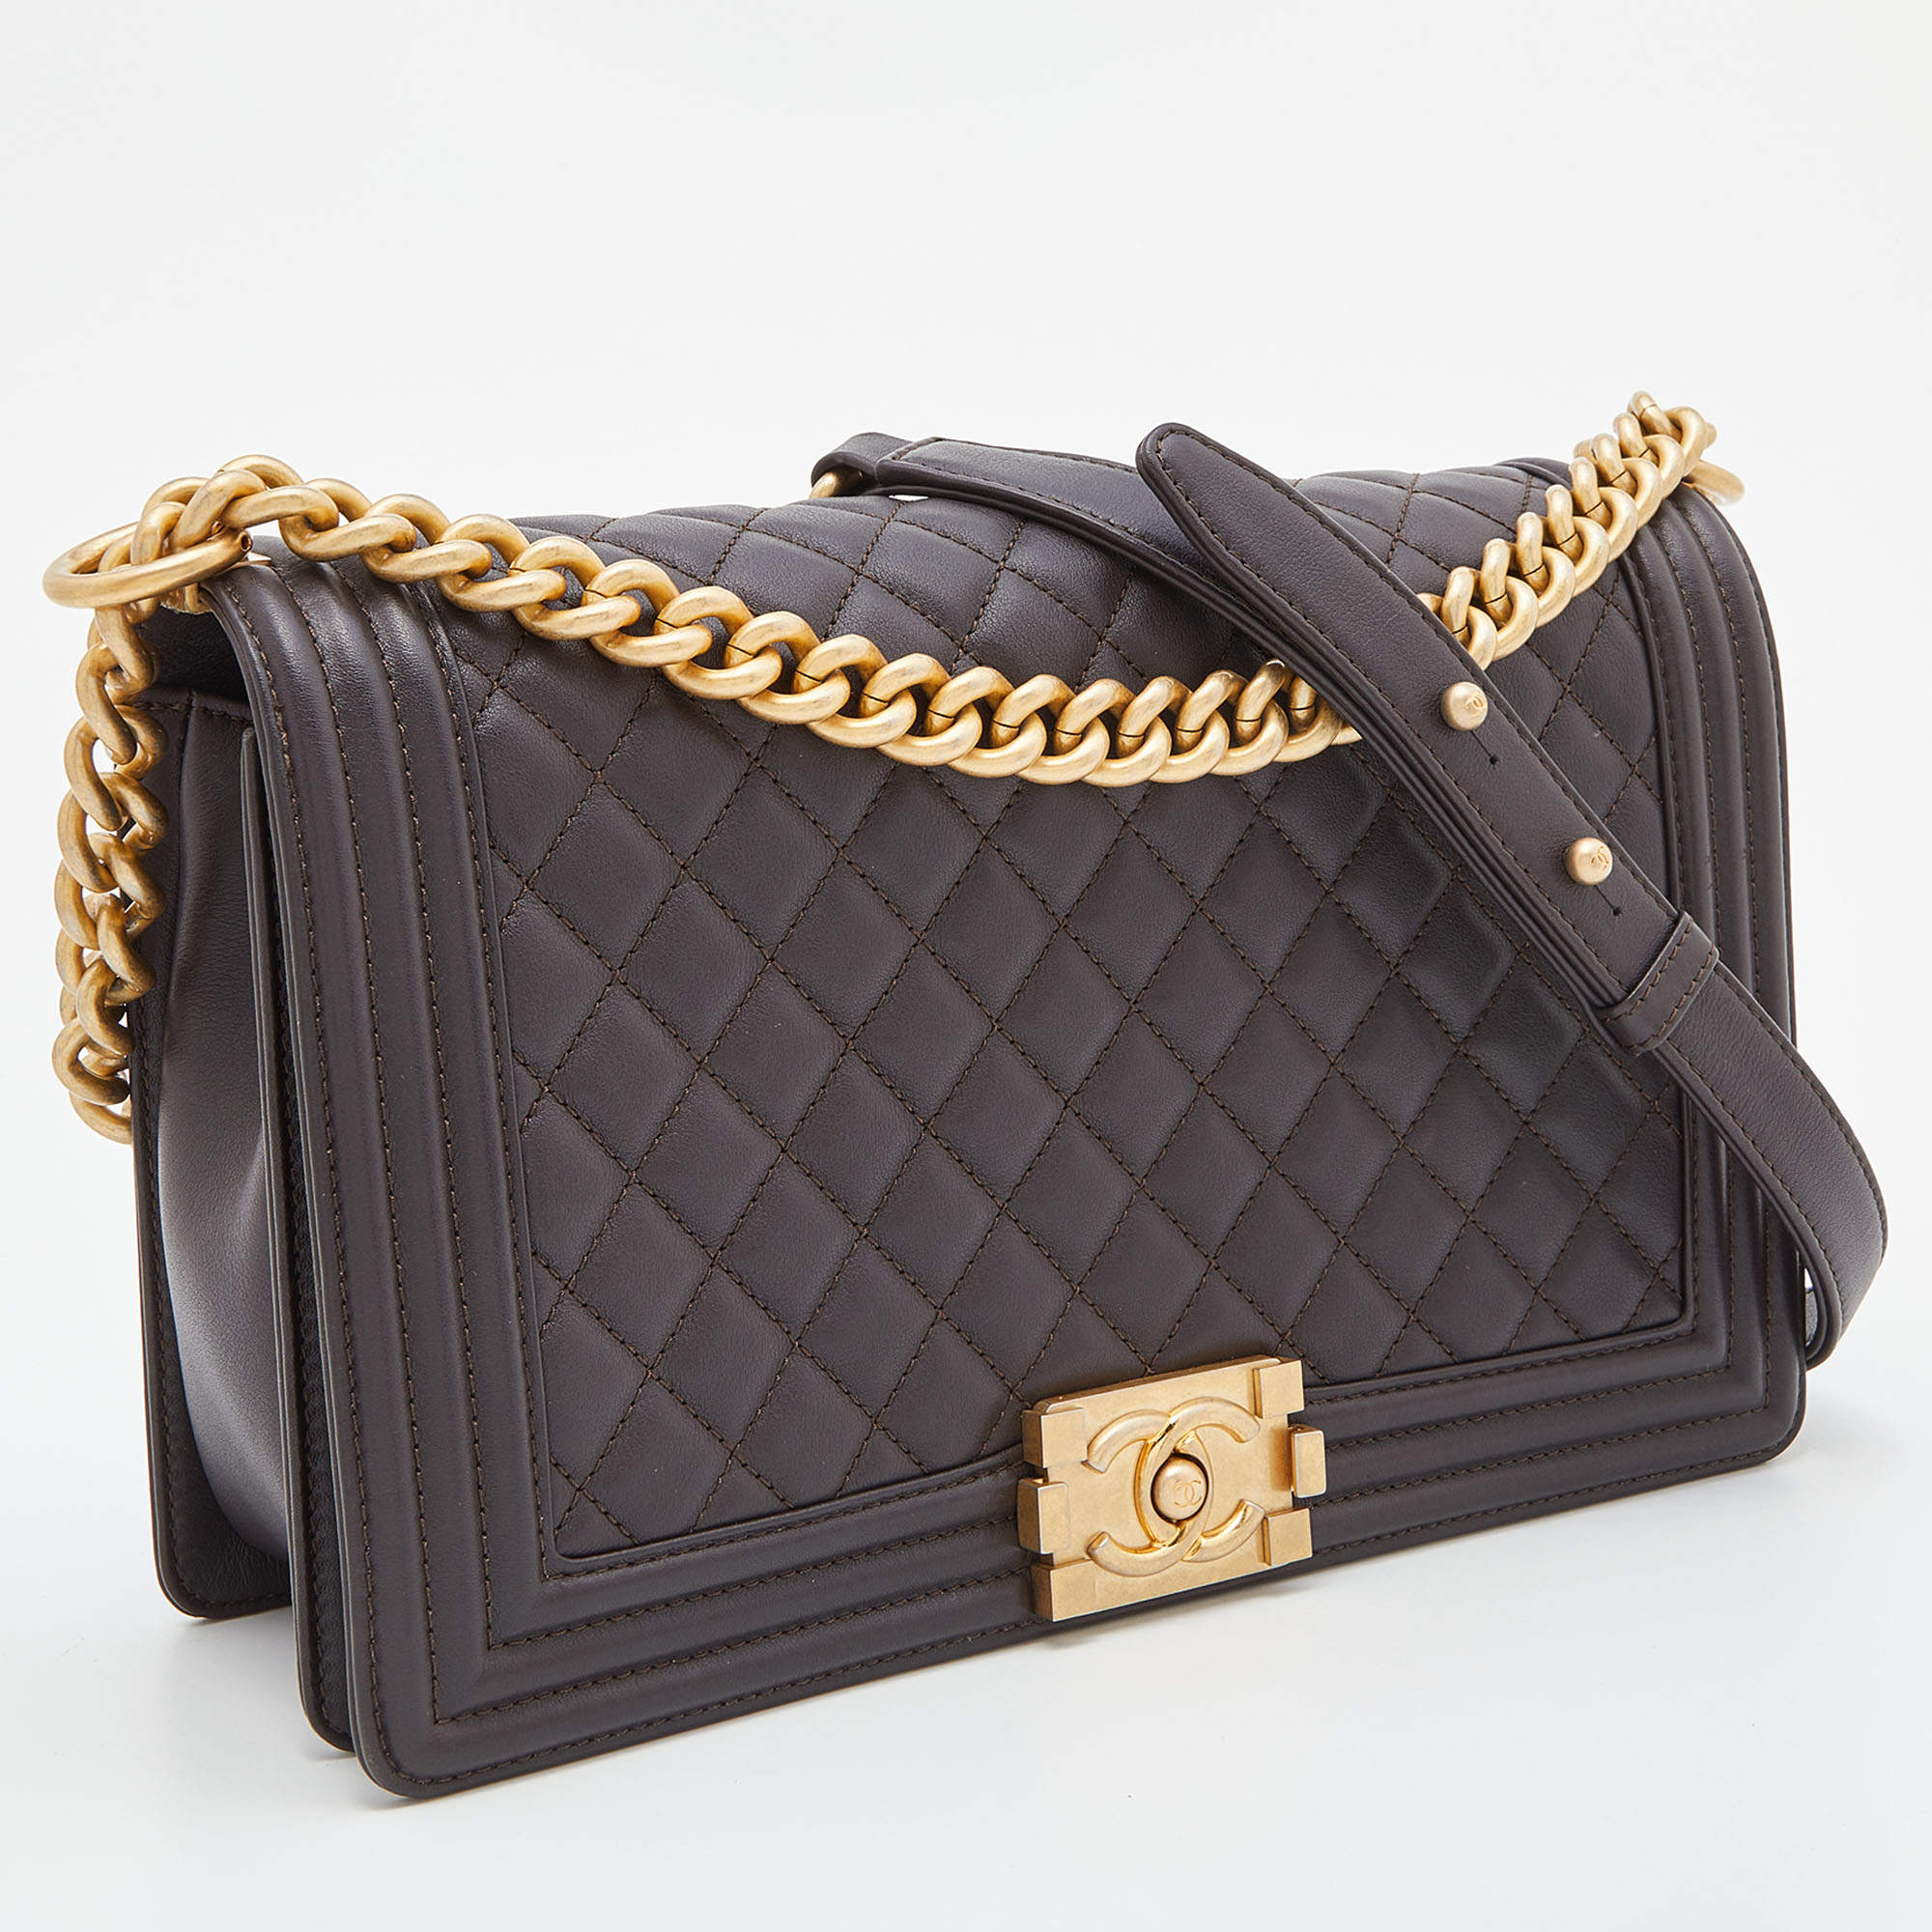 Chanel Beige Quilted Caviar Leather Medium Boy Flap Bag Chanel